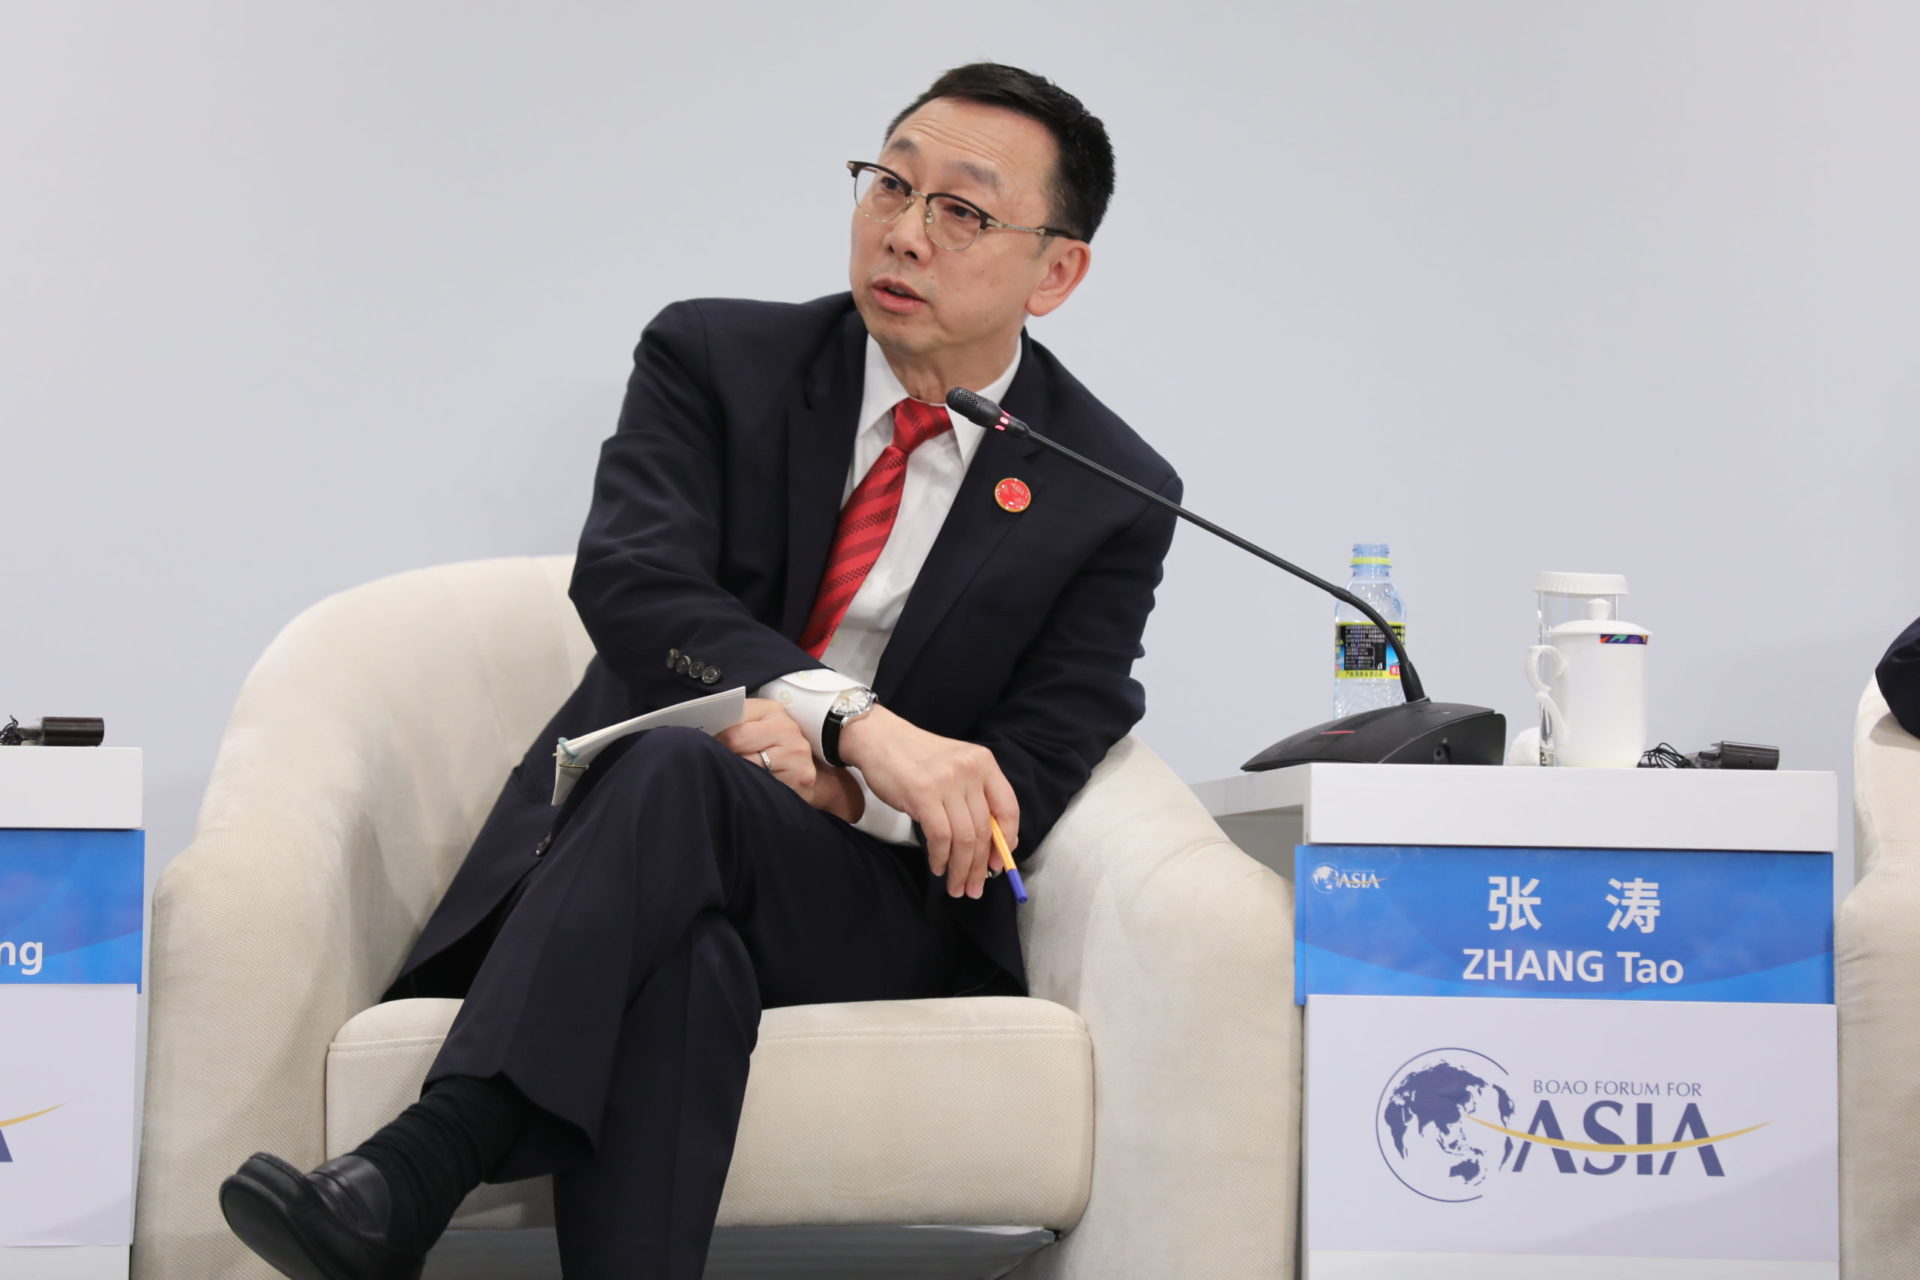 Tao Zhang, Deputy Managing Director of the International Monetary Fund